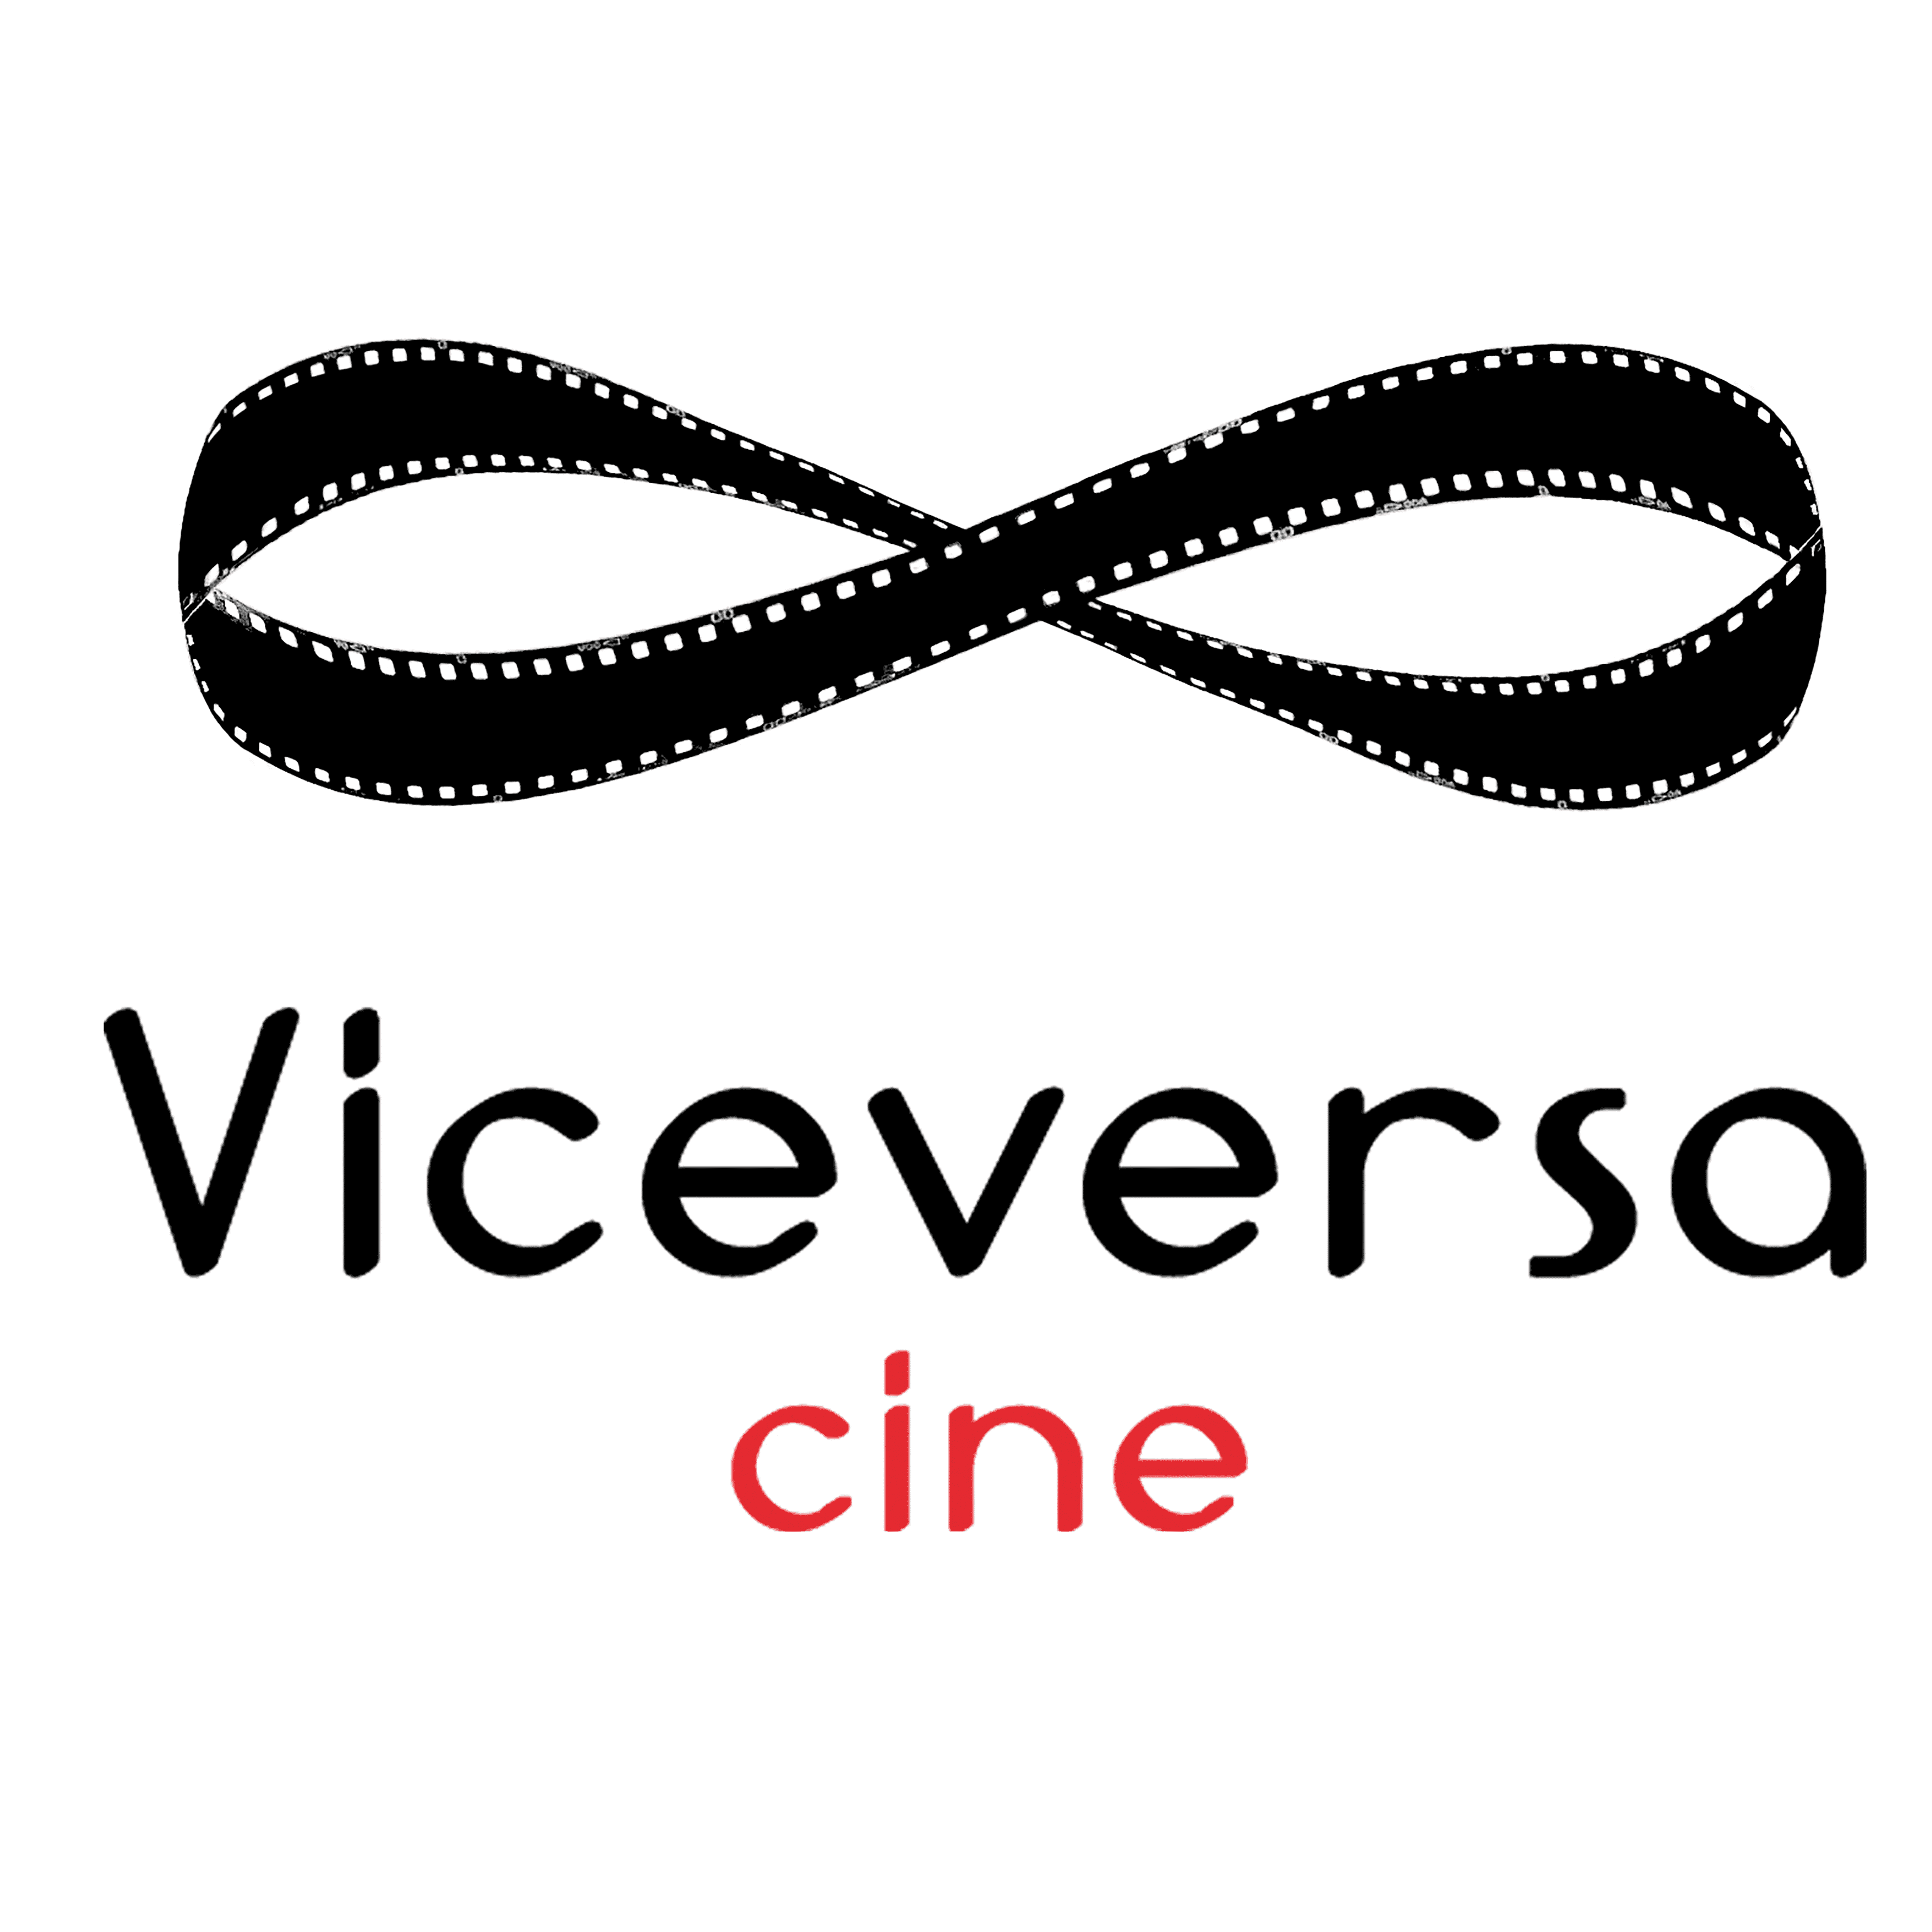 ViceversaCine